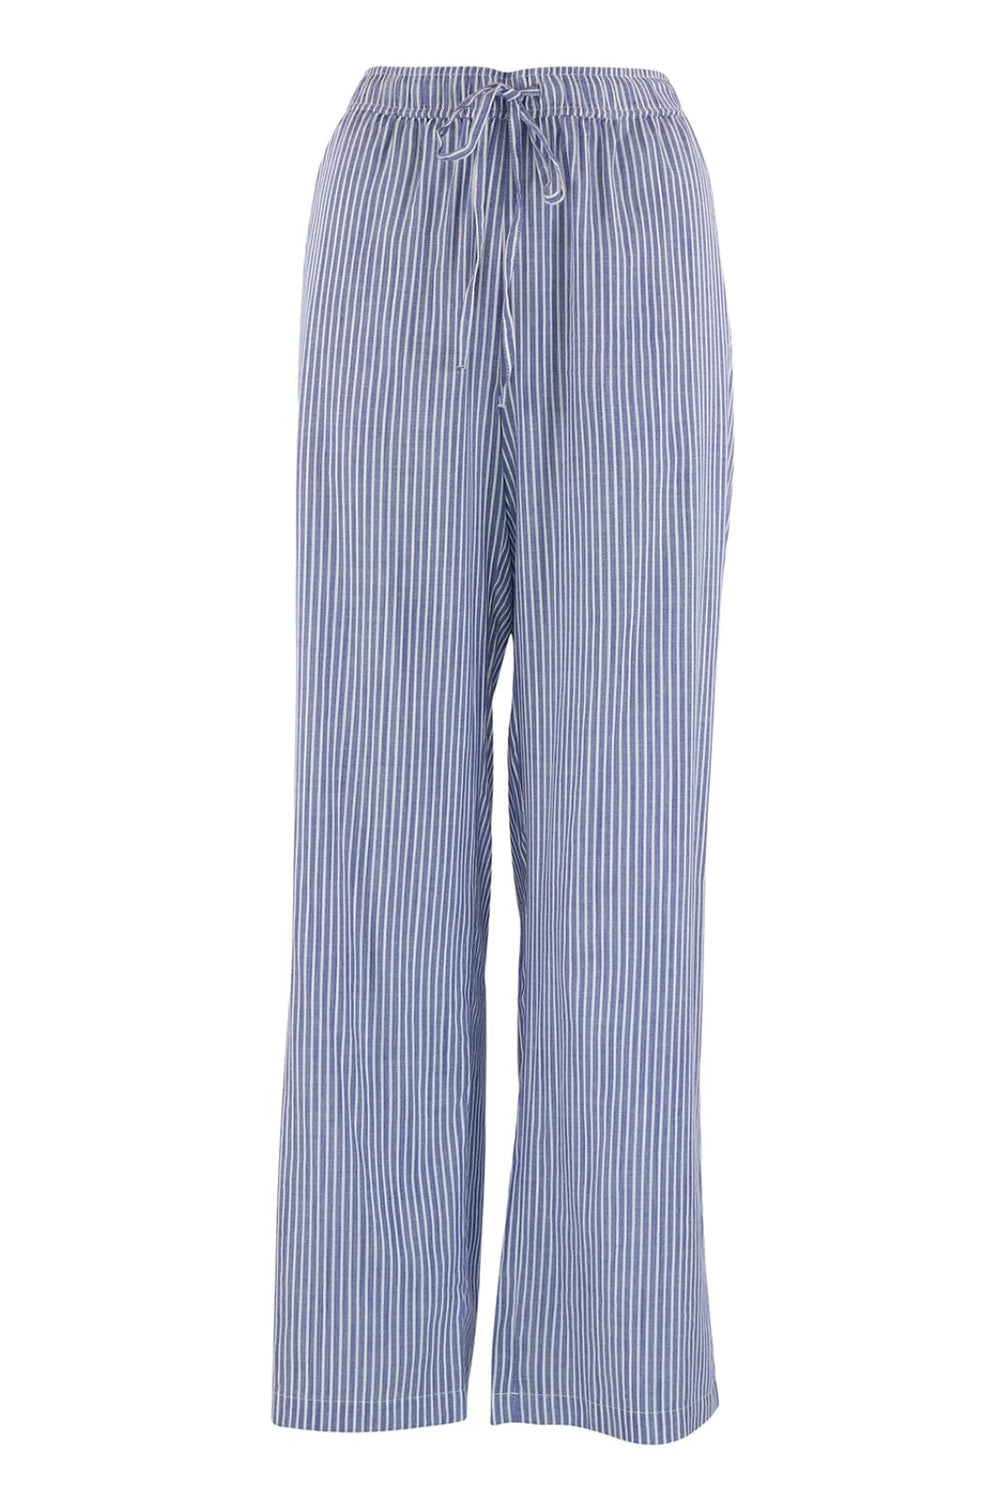 Continue - Lis Pants Stripe - Small Stripe Blue/White Bukser 